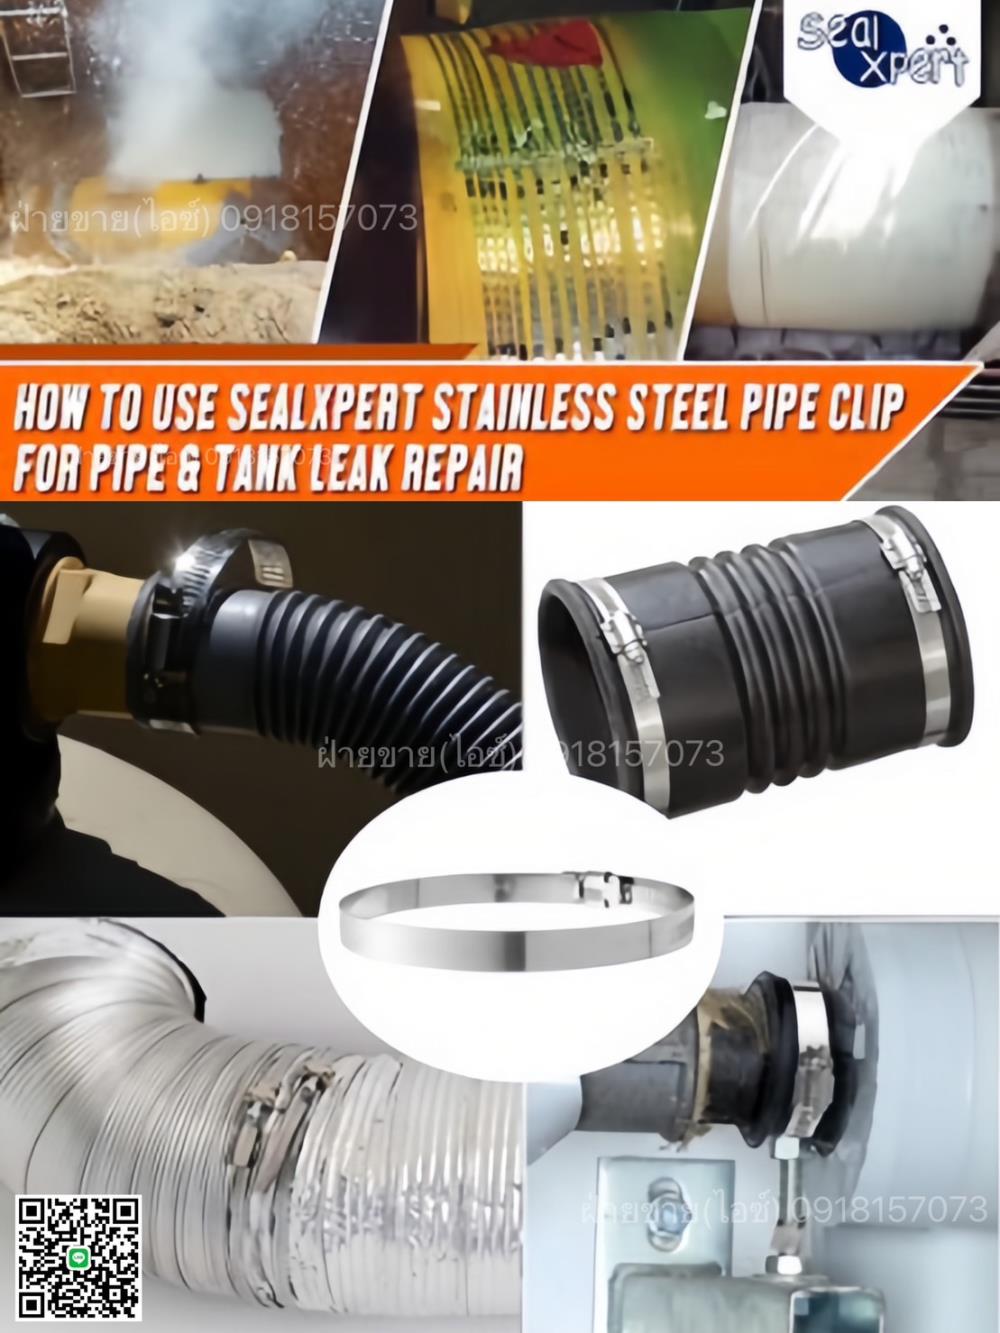 Stainless Steel(SS304) Leak Repair Pipe Clip คลิปรัดท่อ เข็มขัดรัดท่อ แคลมป์รัดท่อ เหล็กรัดสแตนเลส 304 รัดท่อแตก ท่อรั่วที่มีแรงดันสูง -ติดต่อฝ่ายขาย(ไอซ์)0918157073ค่ะ